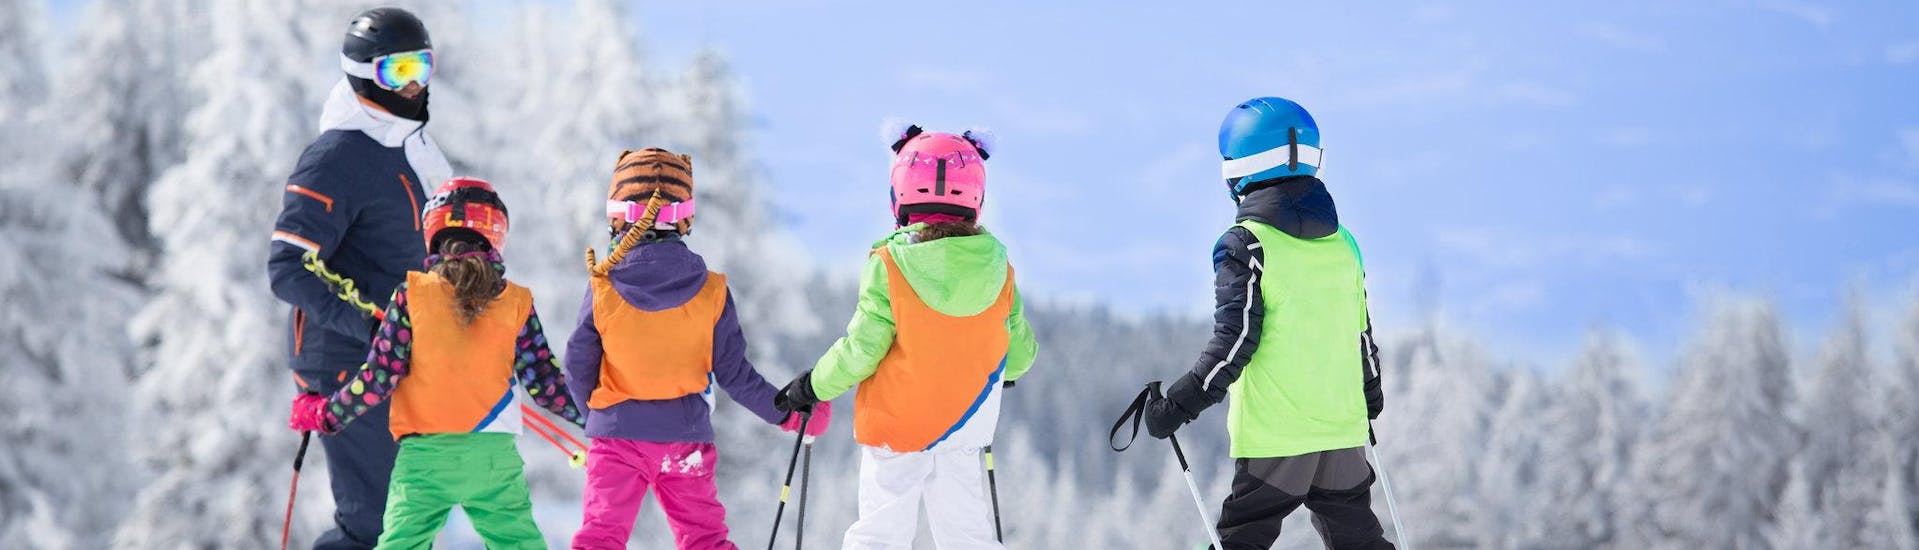 3 skiers prepare for their ski lessons in English in the ski resort of St. Johann in Tirol.